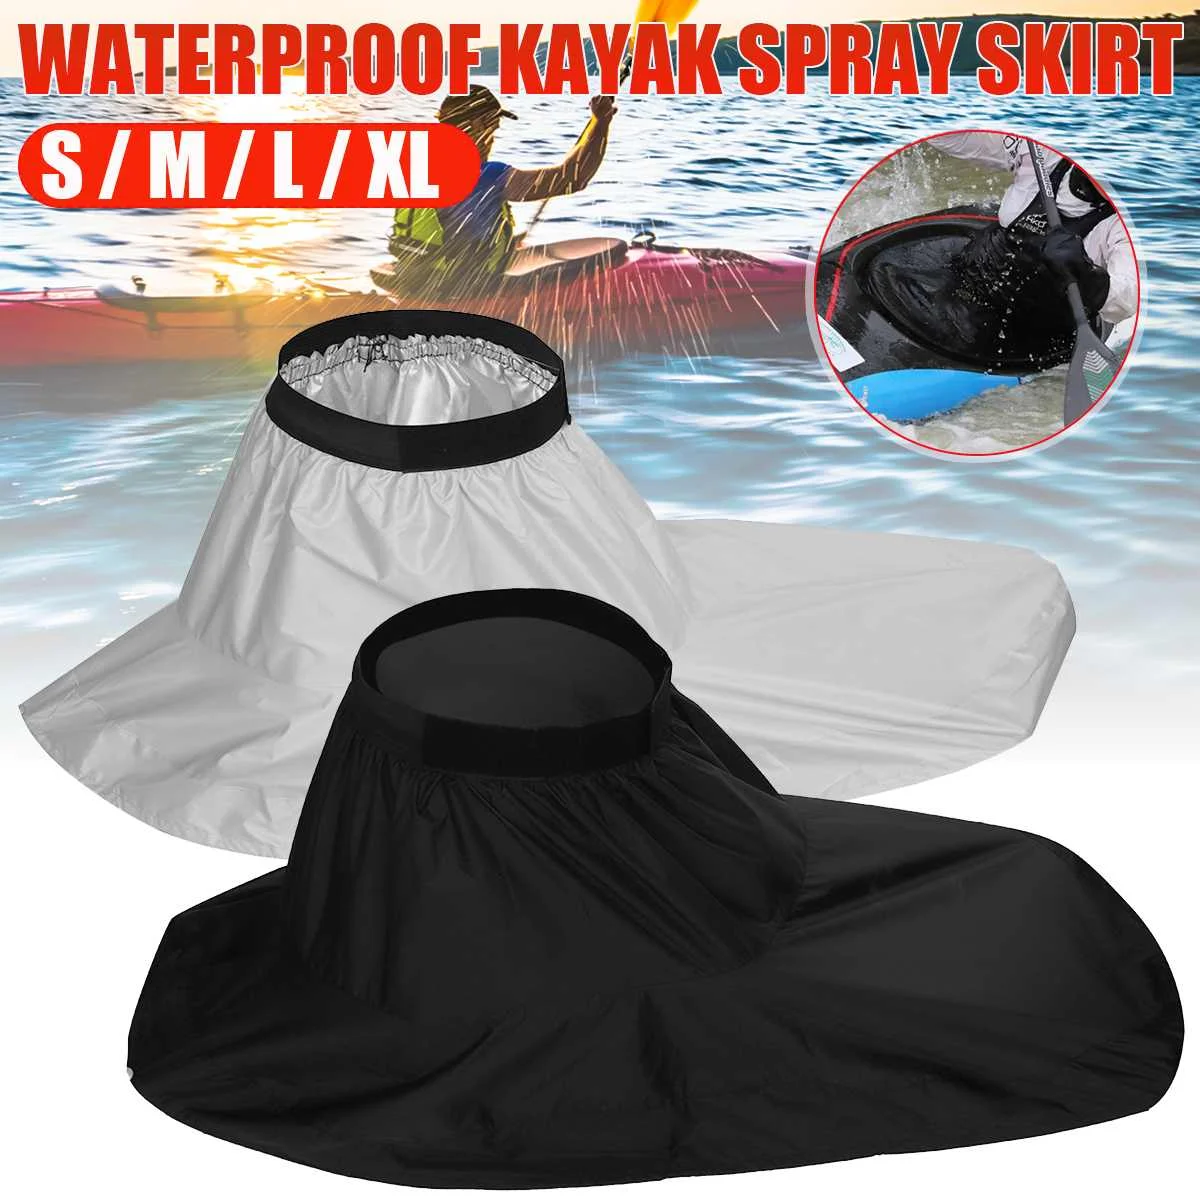 Universal Kayak Spray Skirt Deck Cockpit Sprayskirt Waterproof Cover L Black 